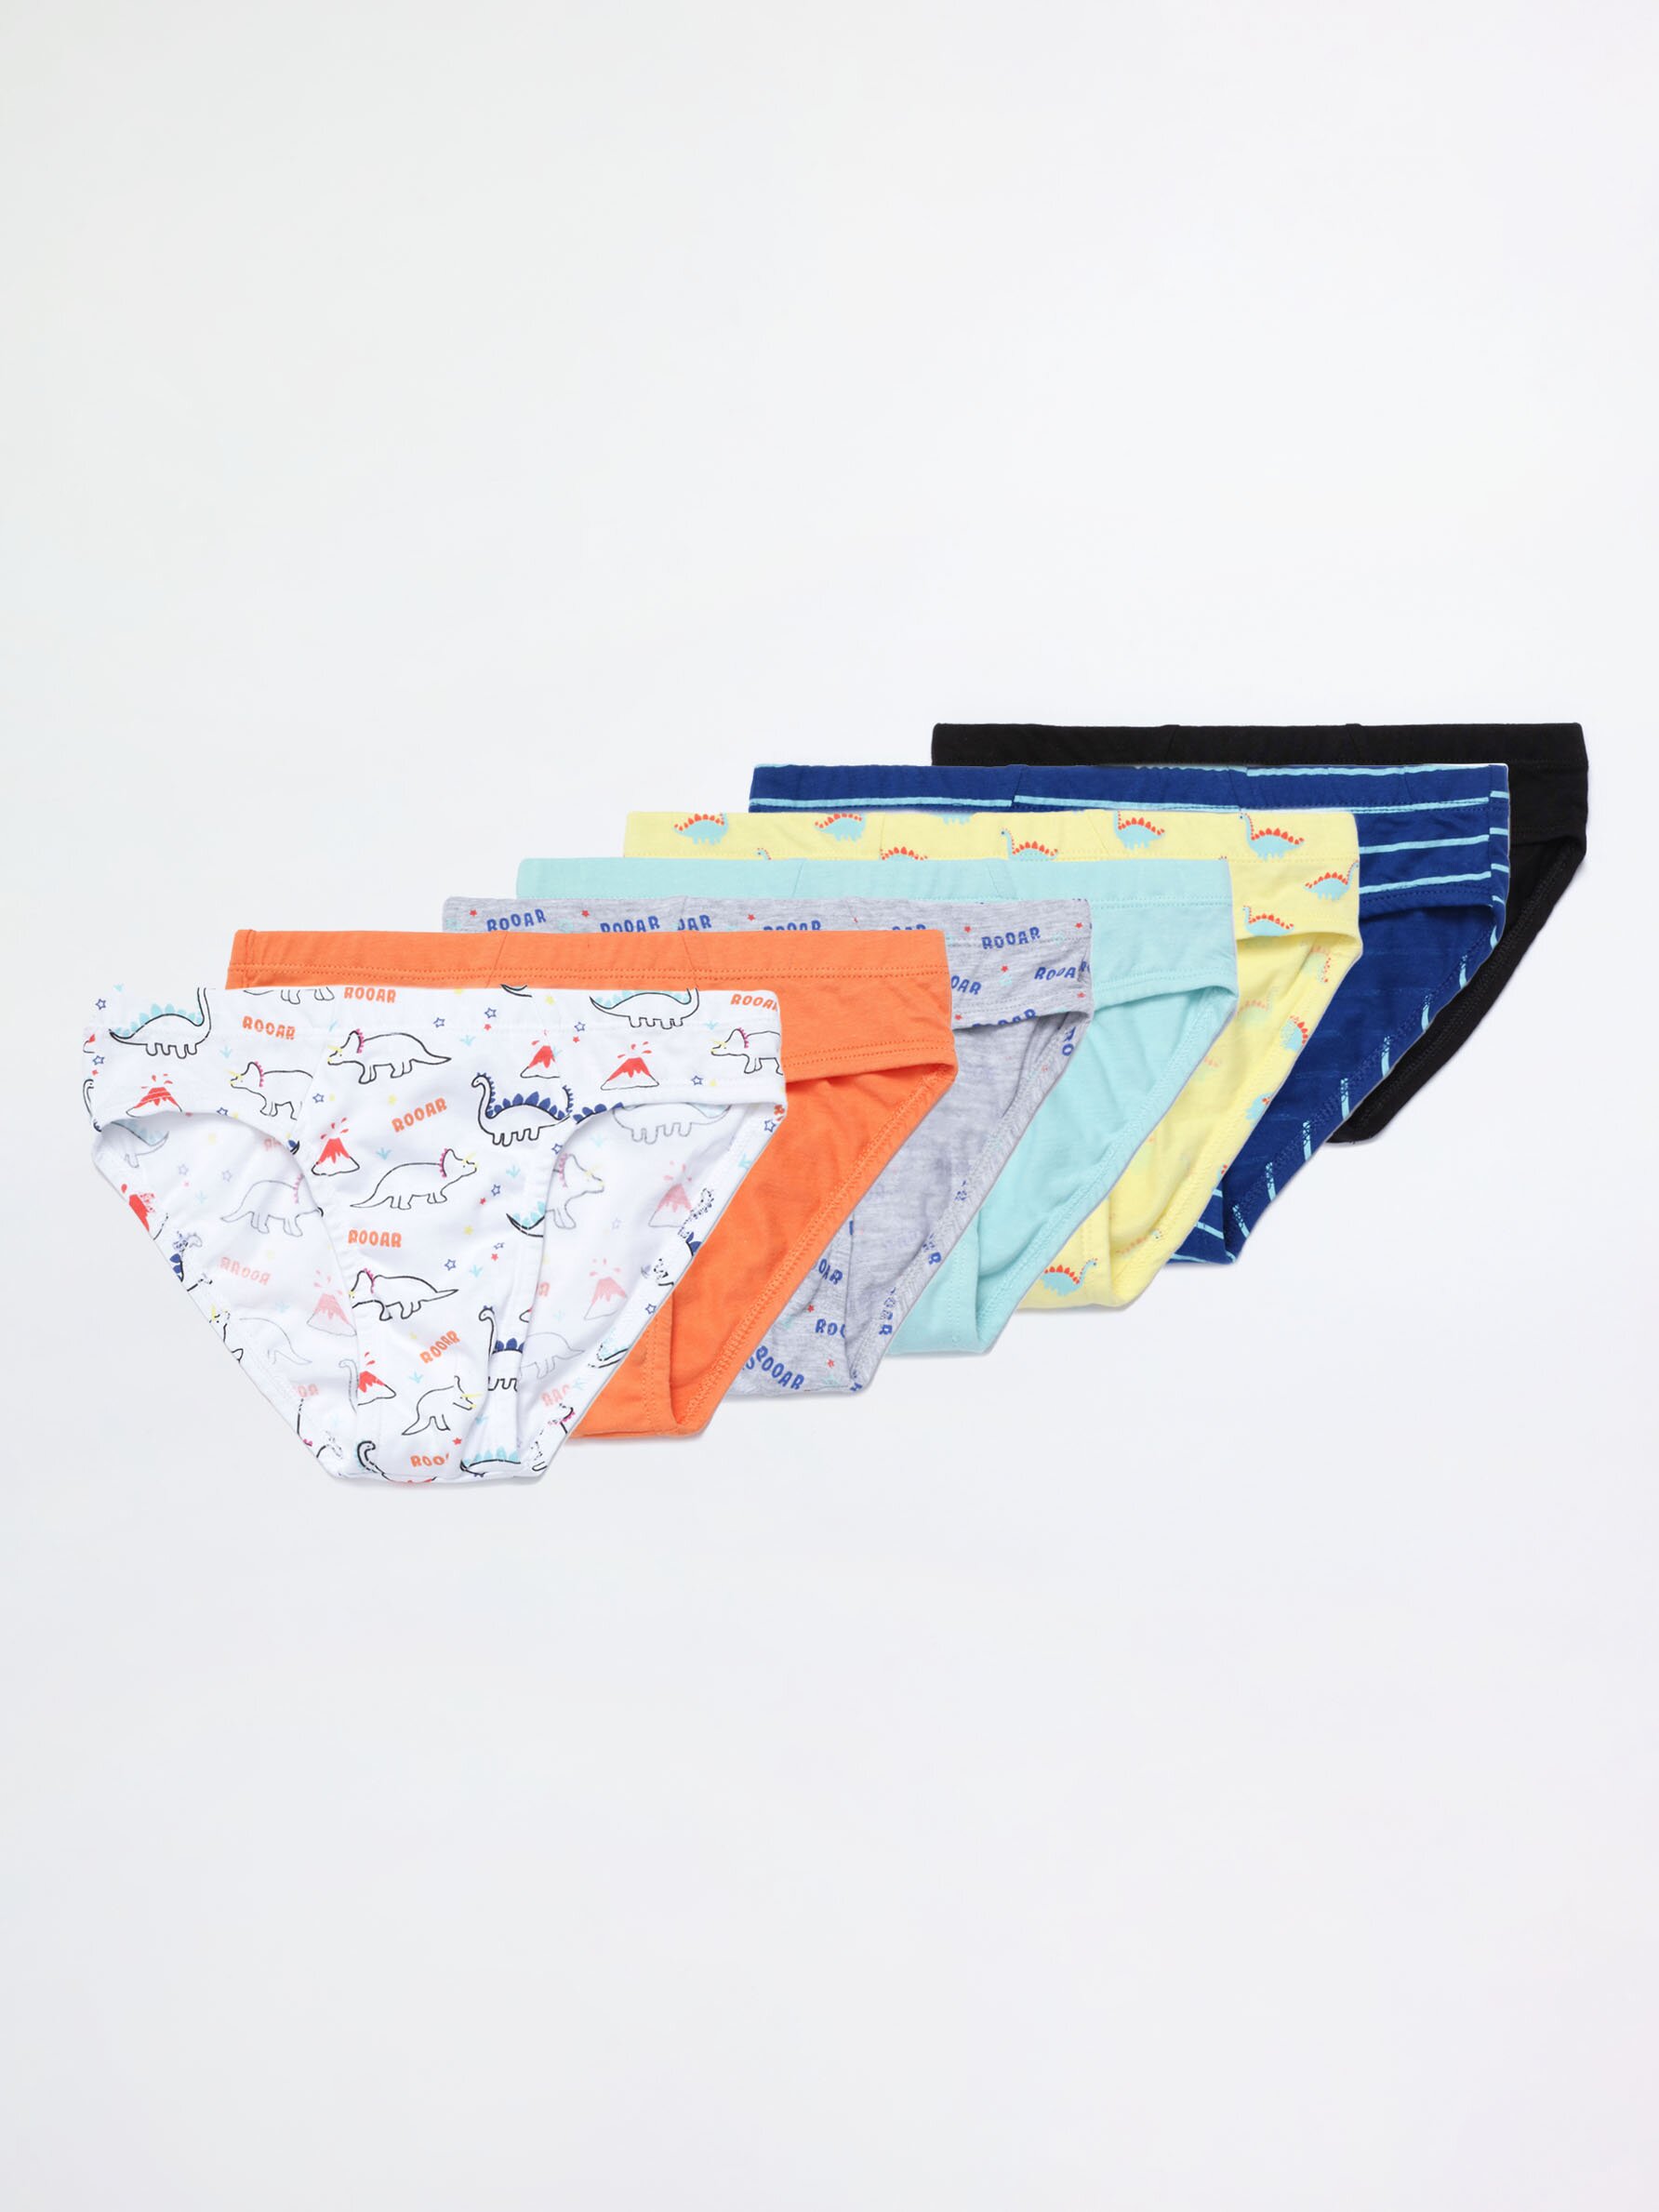 Printed Brief Underwear 7-Pack for Boys